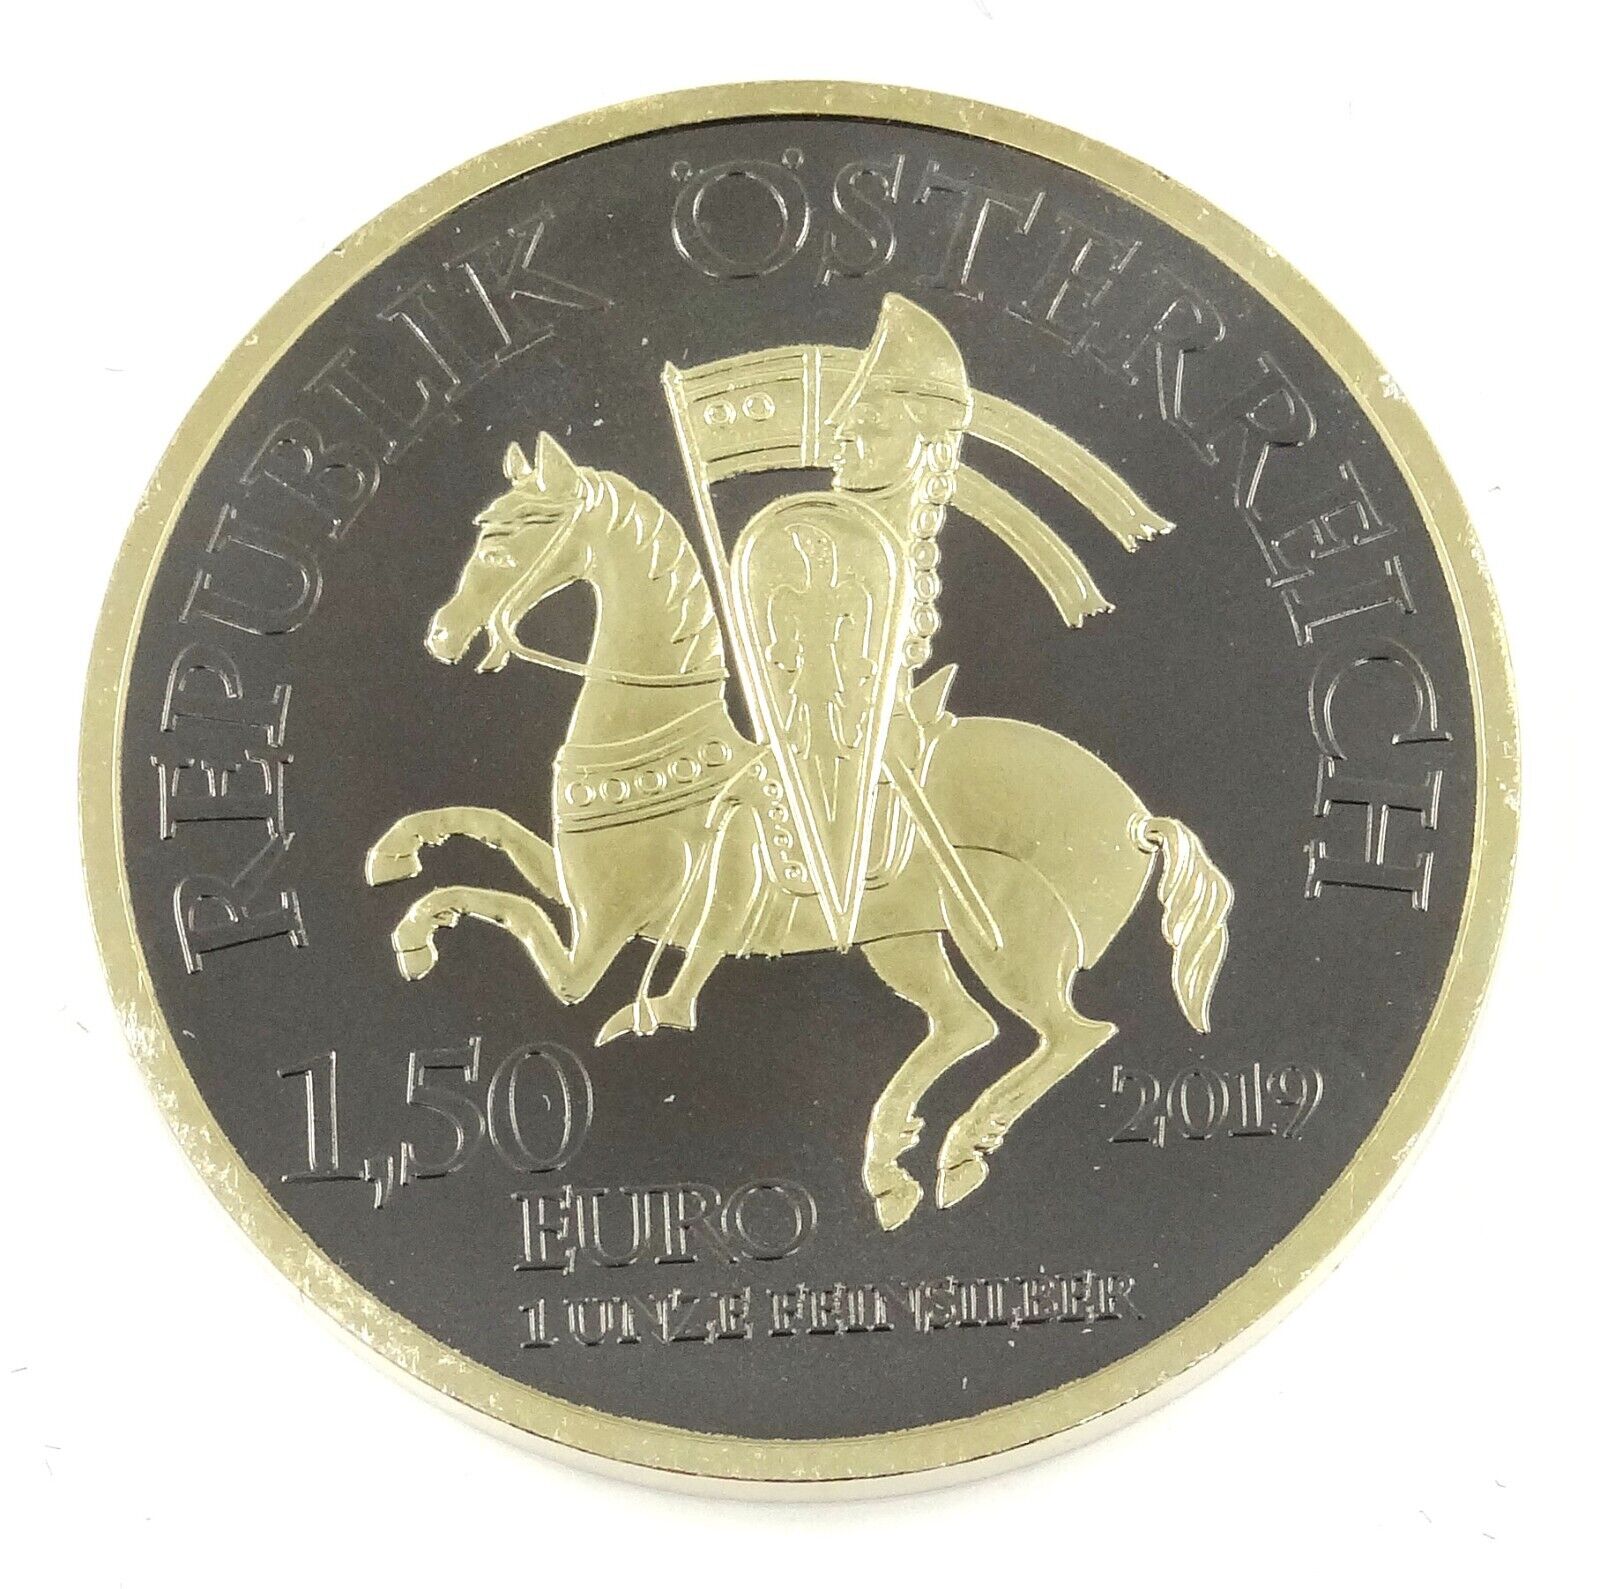 1 Oz Silver Coin 2019 1.5 Euro Austria Golden Ring Robin Hood #500/500 LAST MADE-classypw.com-1